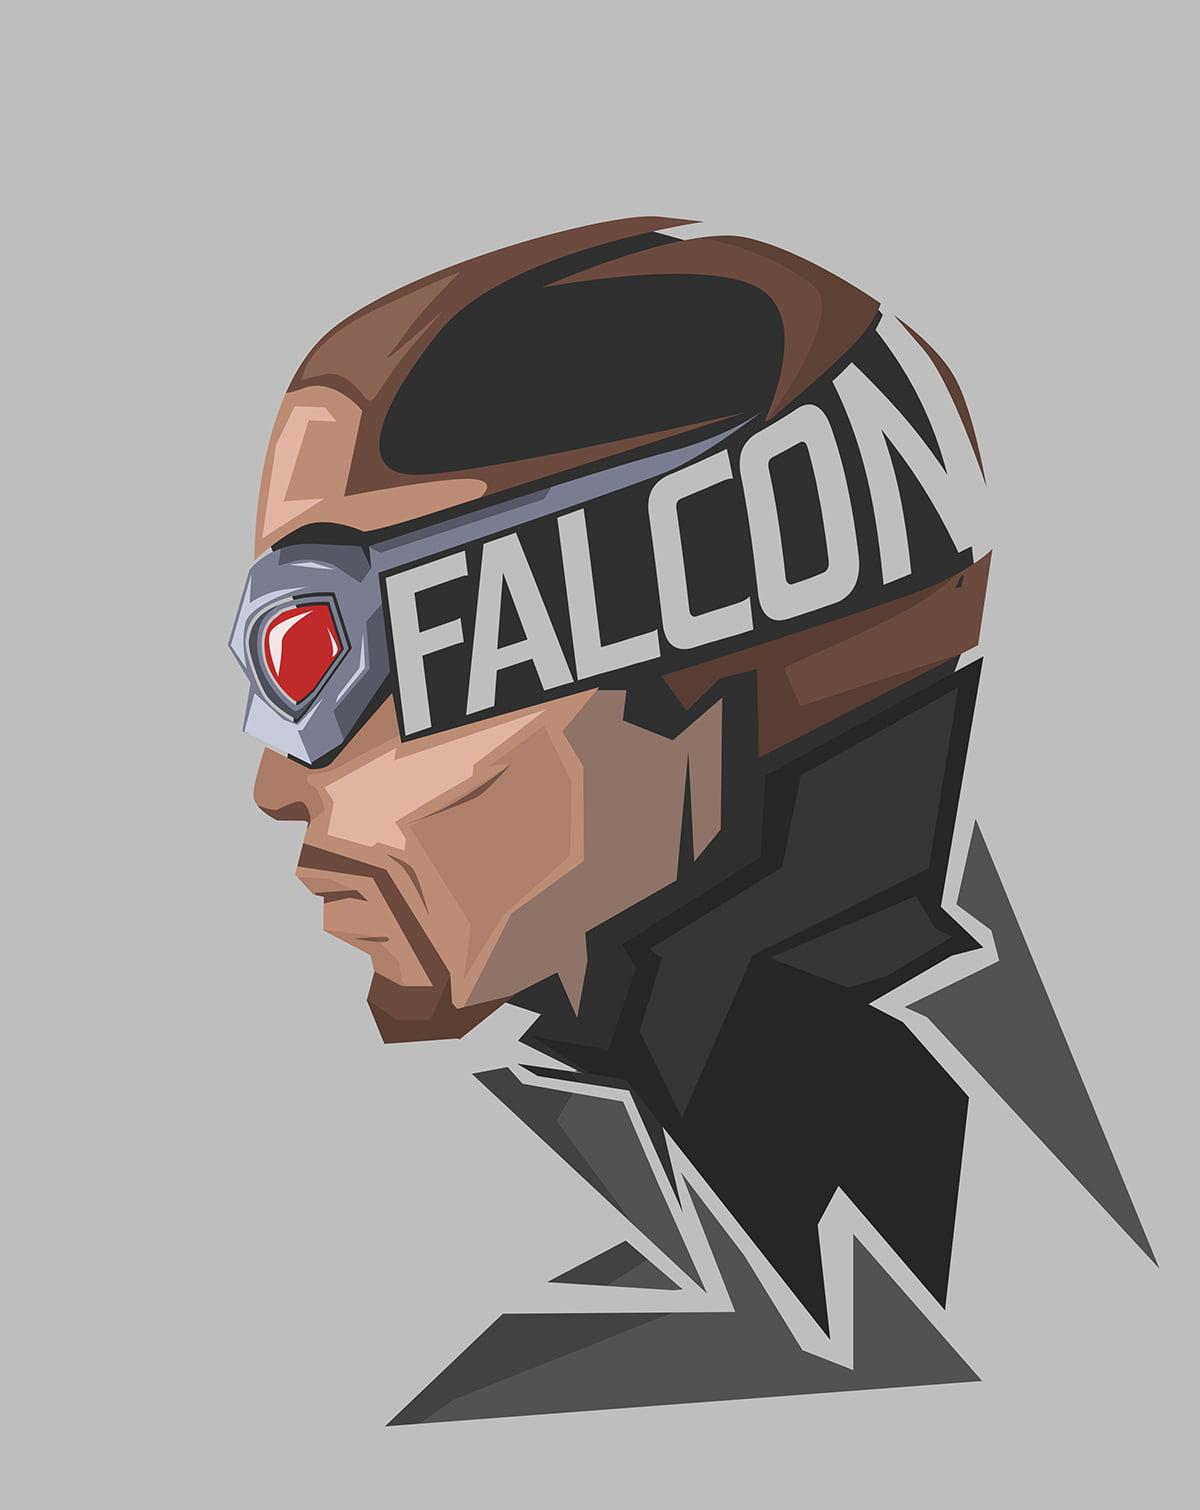 Marvel Falcon portrait painting, Falcon, Marvel Comics, gray